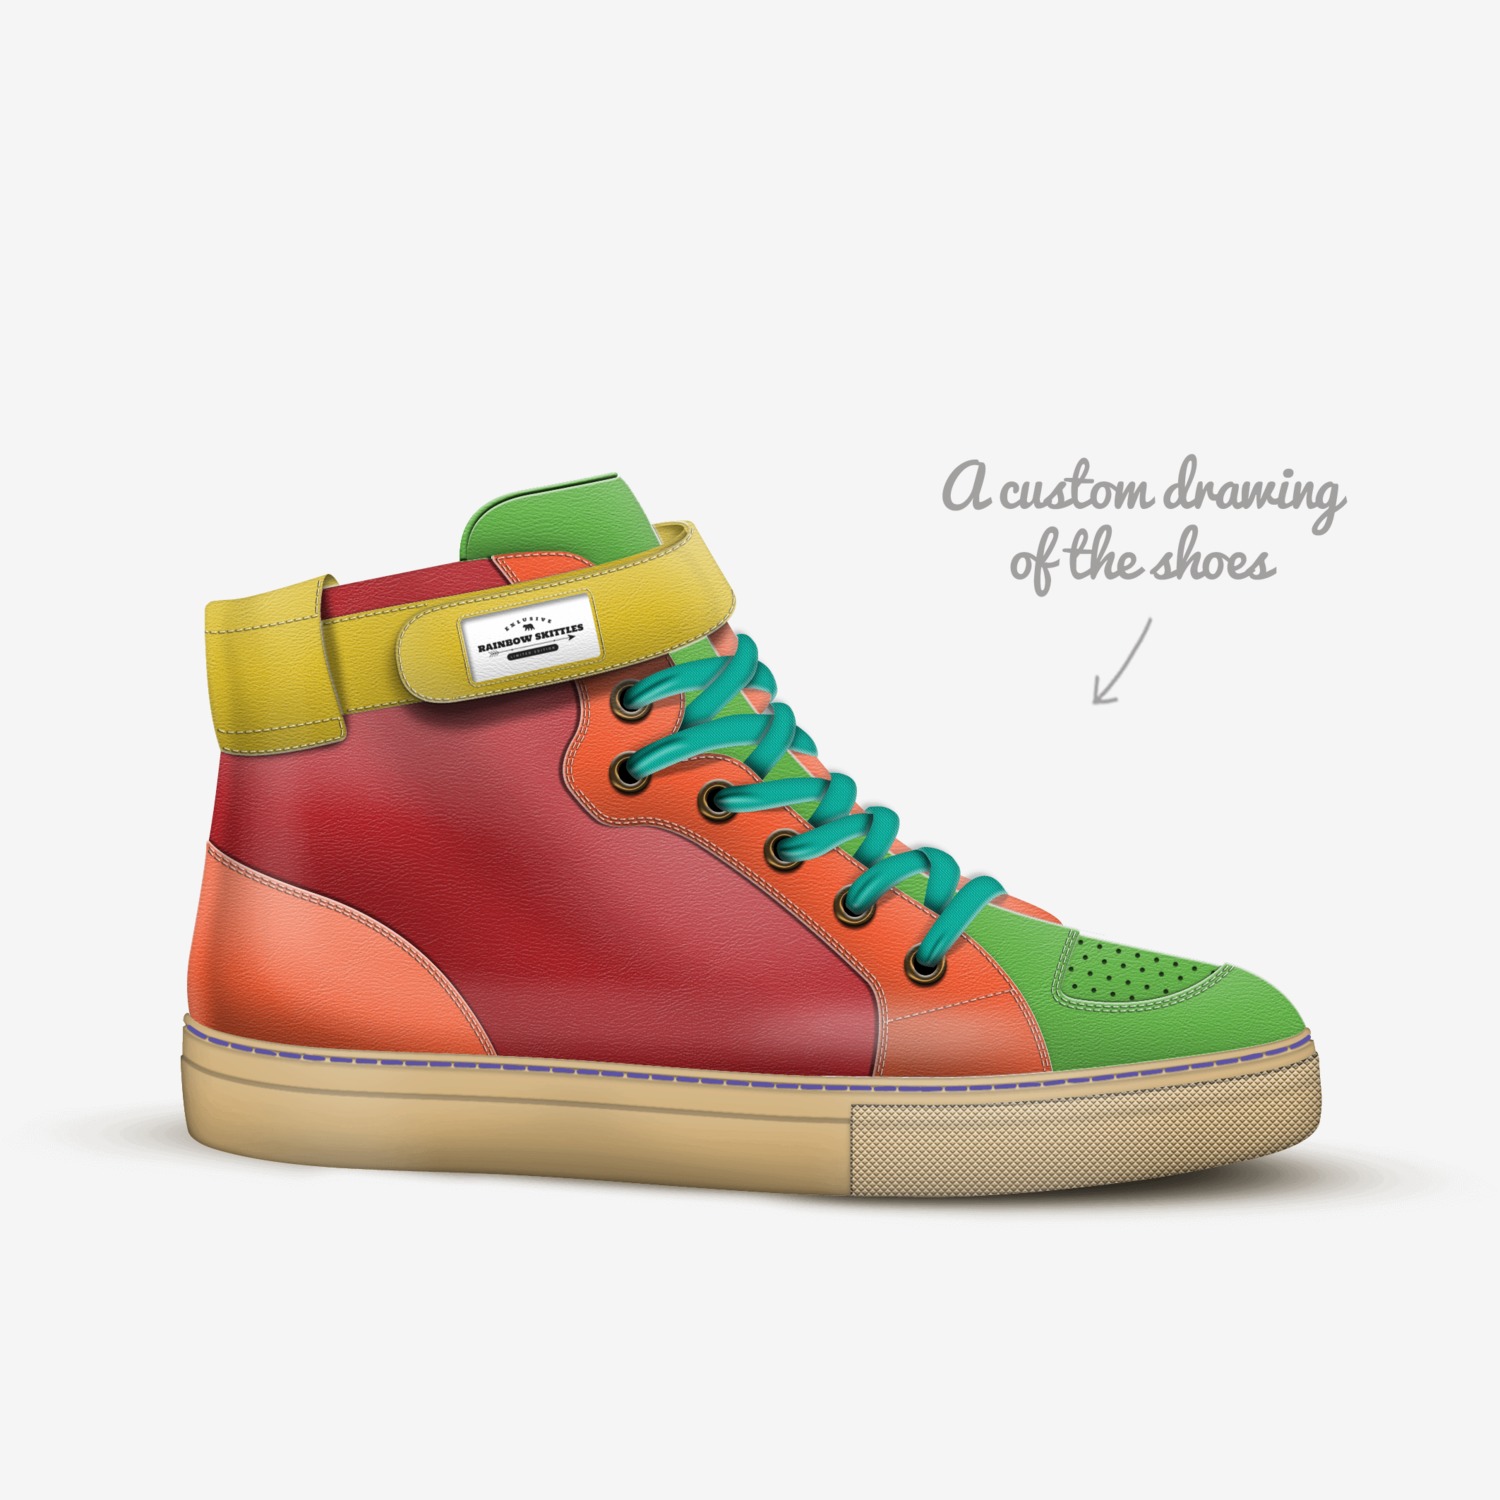 Vuggeviser tælle vores rainbow skittles | A Custom Shoe concept by Mackenzie Phillips